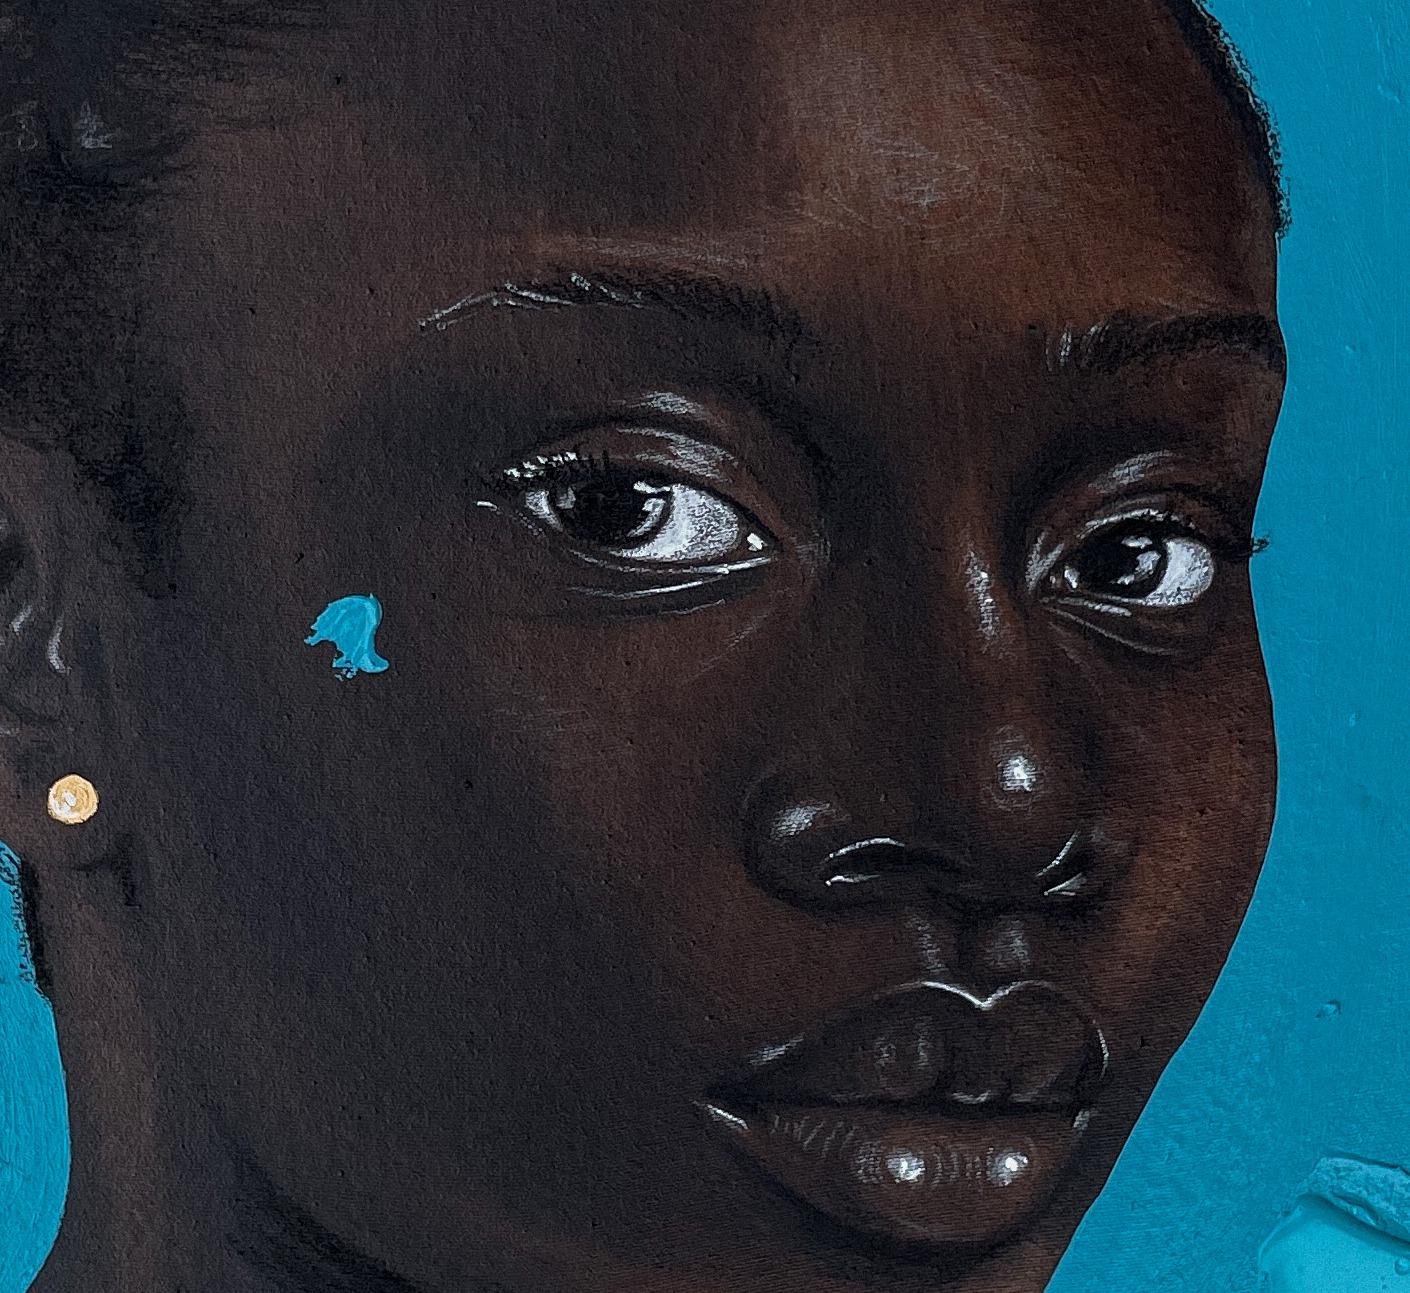 Oloju Ede (One With Beautiful Eyes) - Blue Portrait Painting by Eyitayo Alagbe